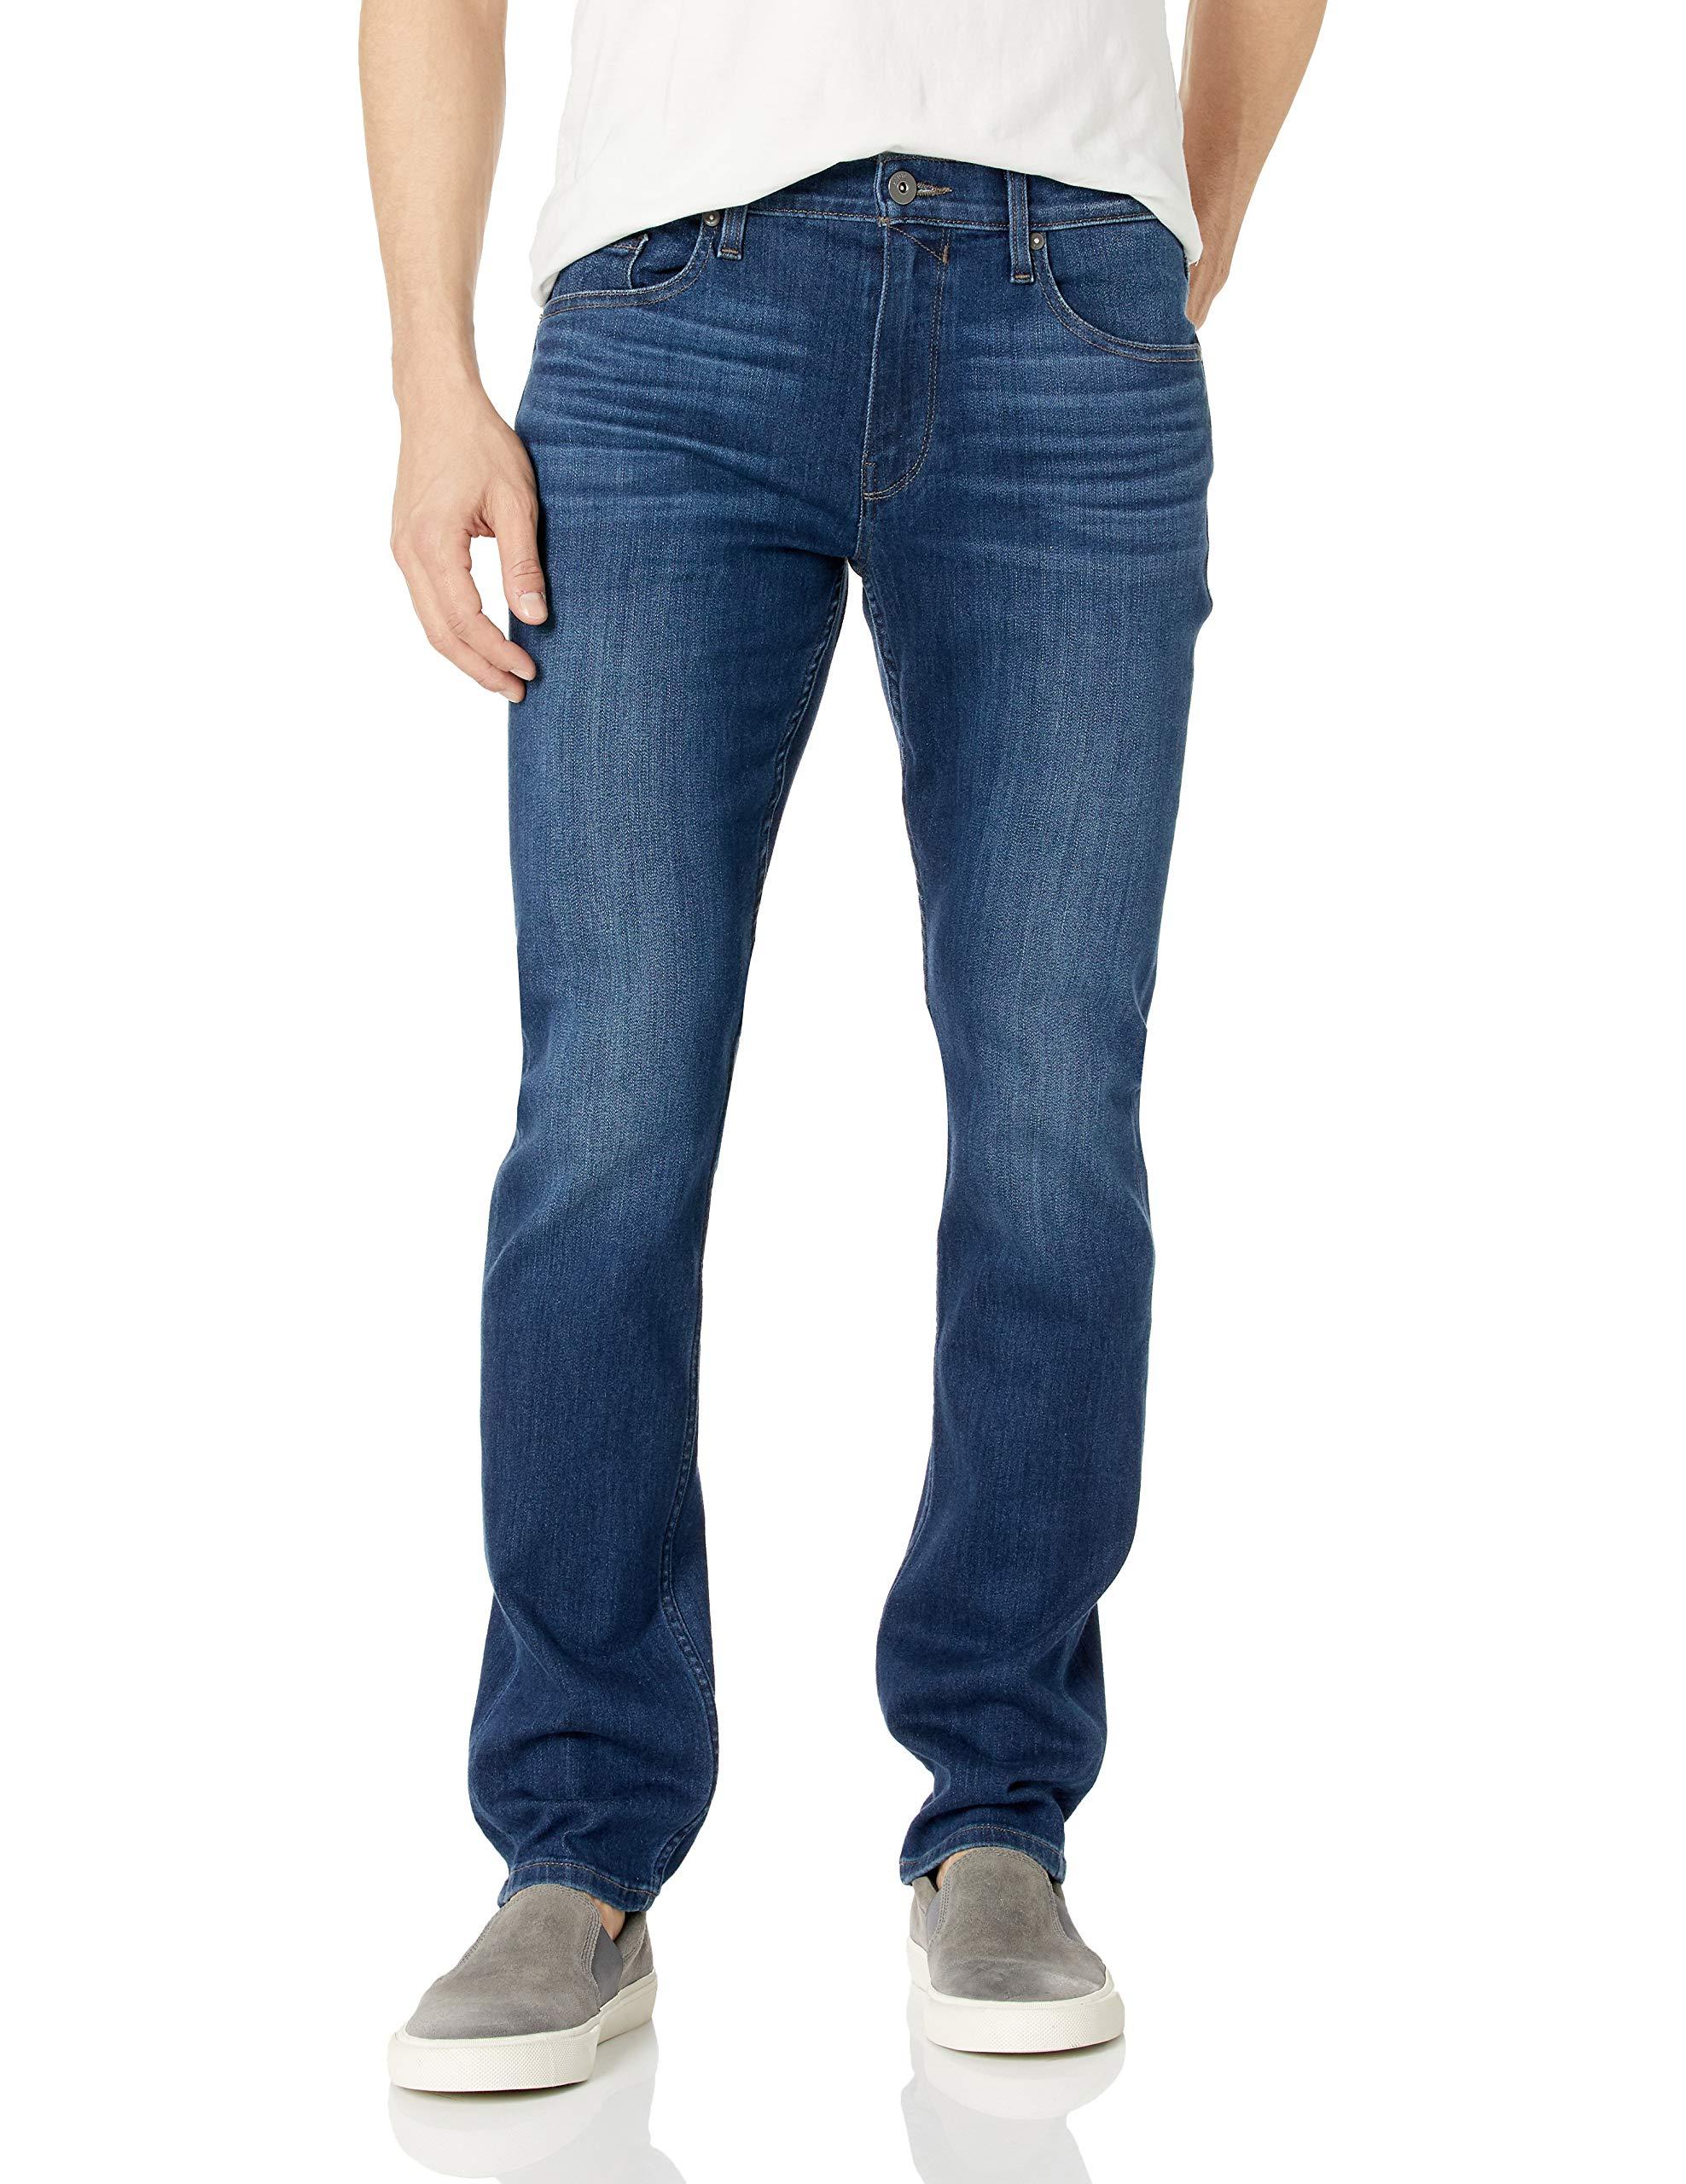 PAIGE Denim Federal Slim Straight Leg Jean in Blue for Men - Save 19% ...